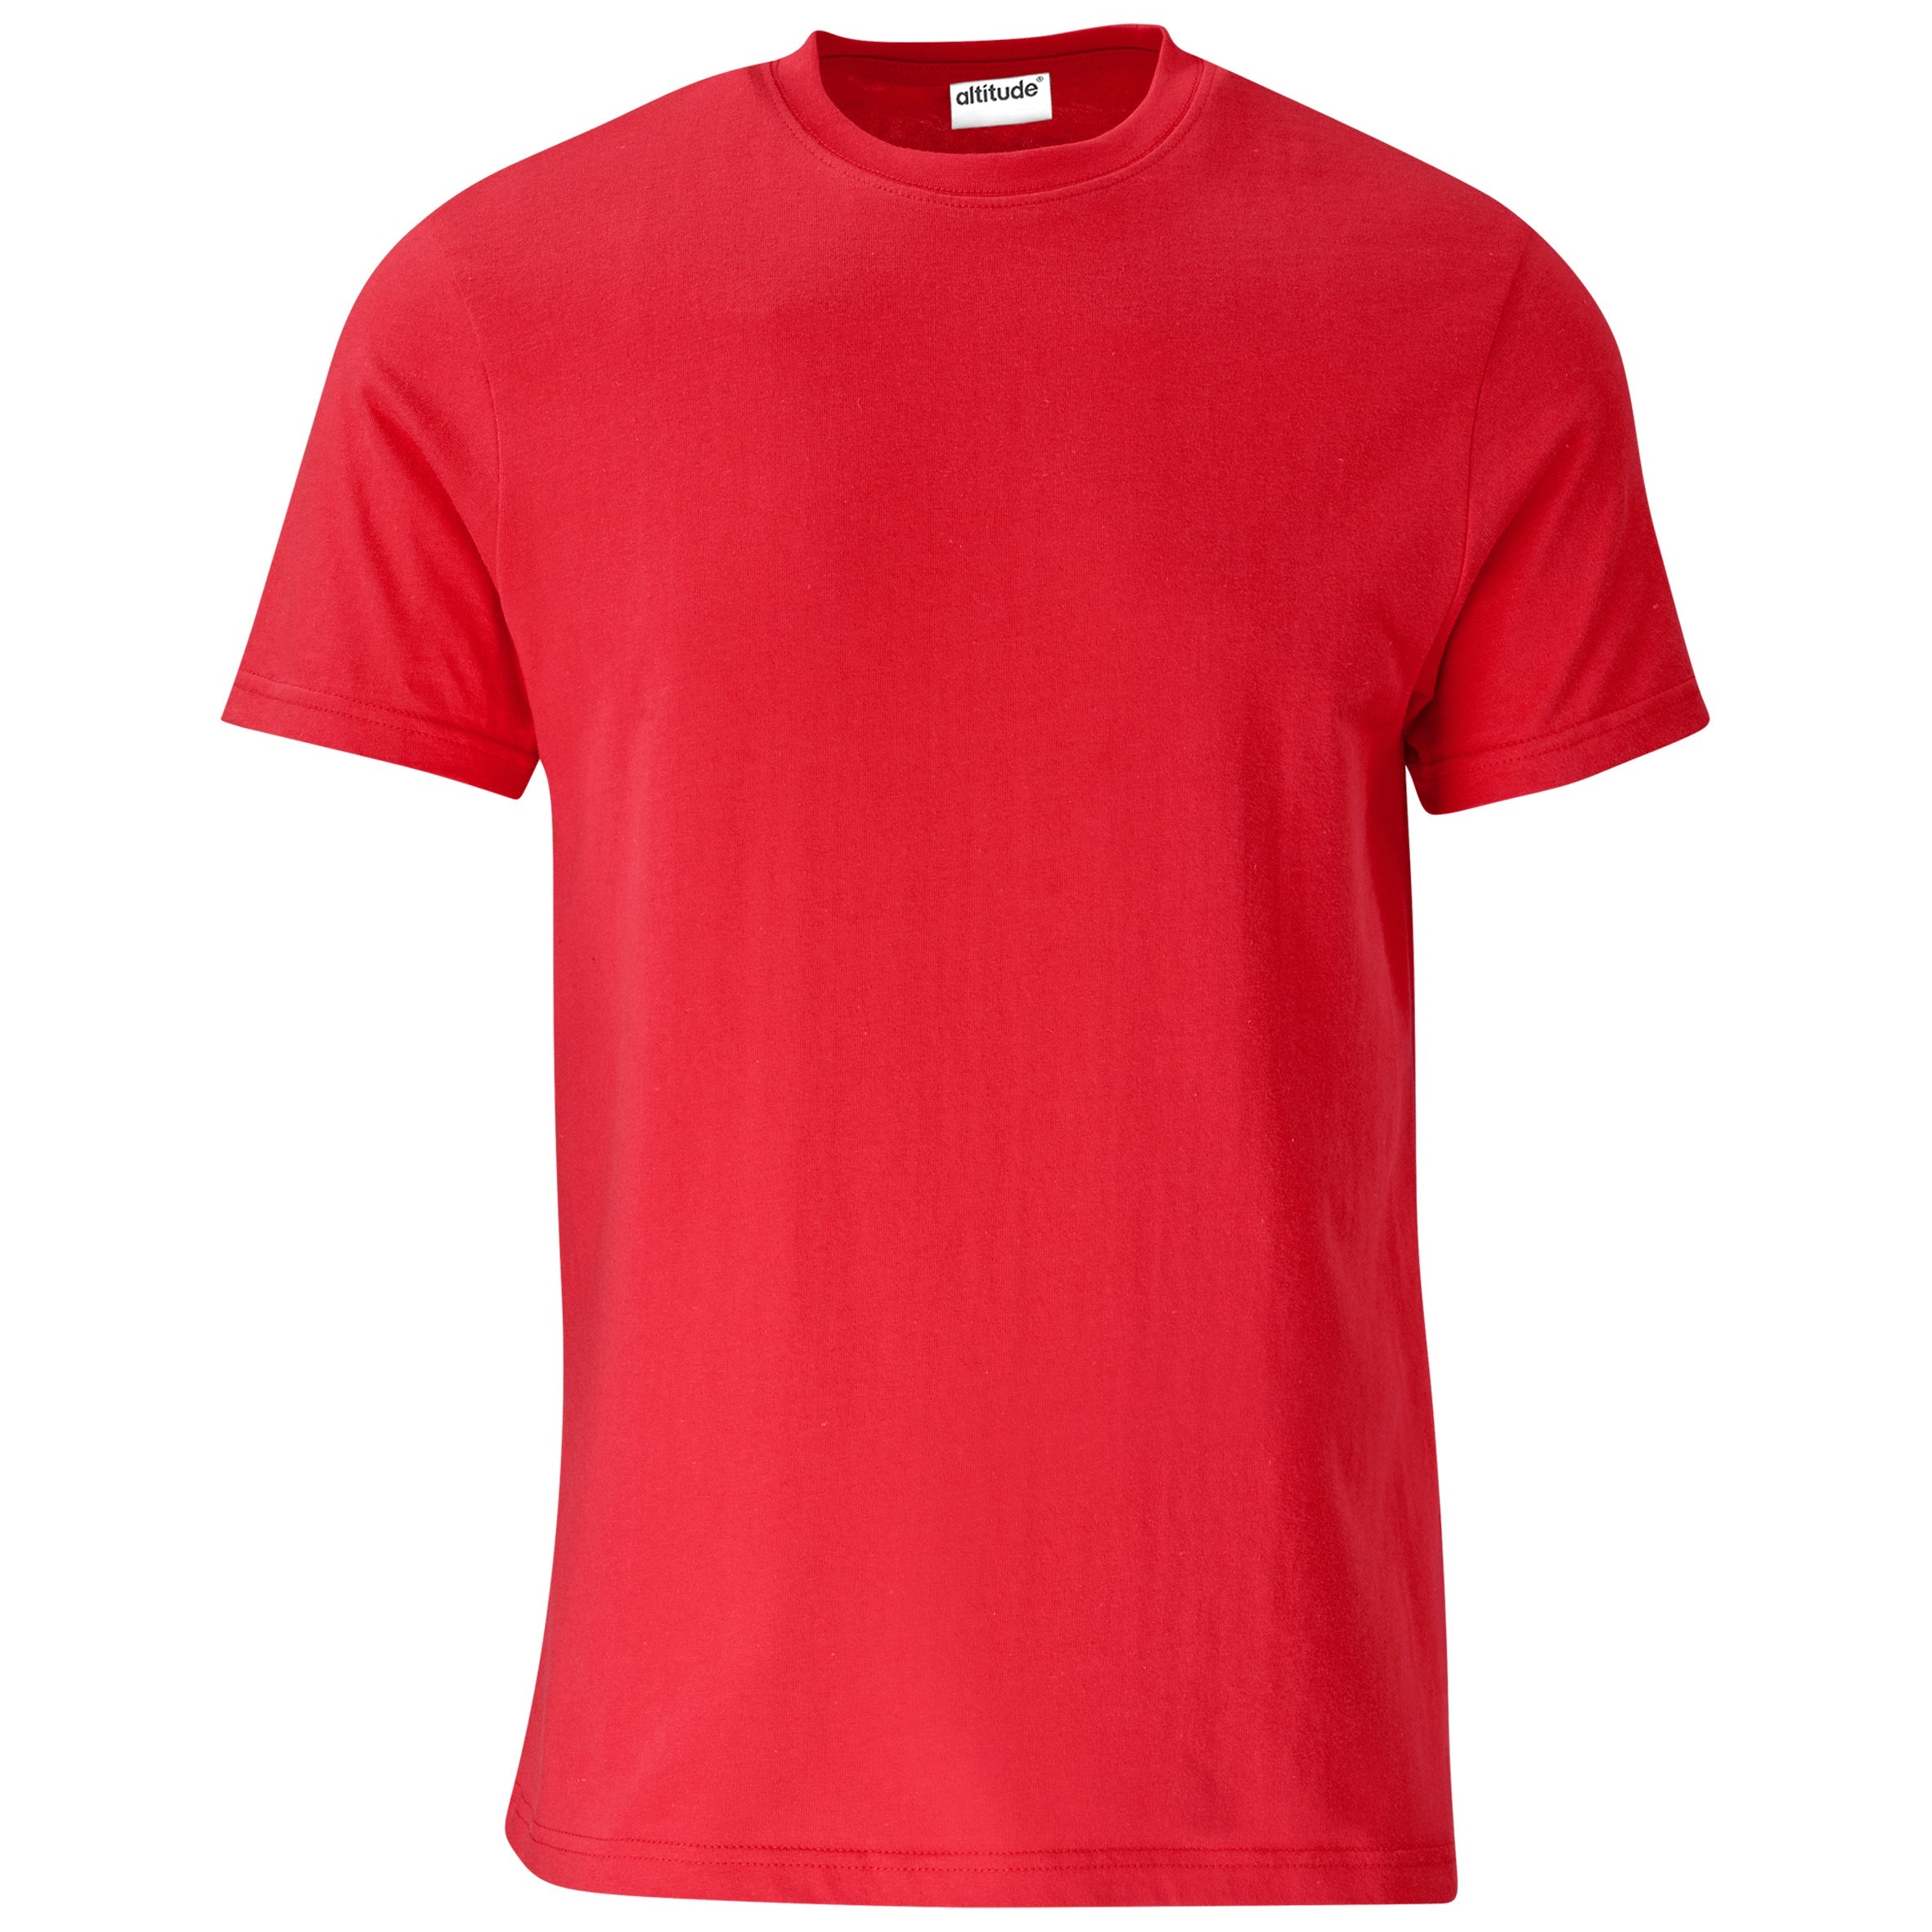 Unisex Promo T-shirt-2XL-Red-R